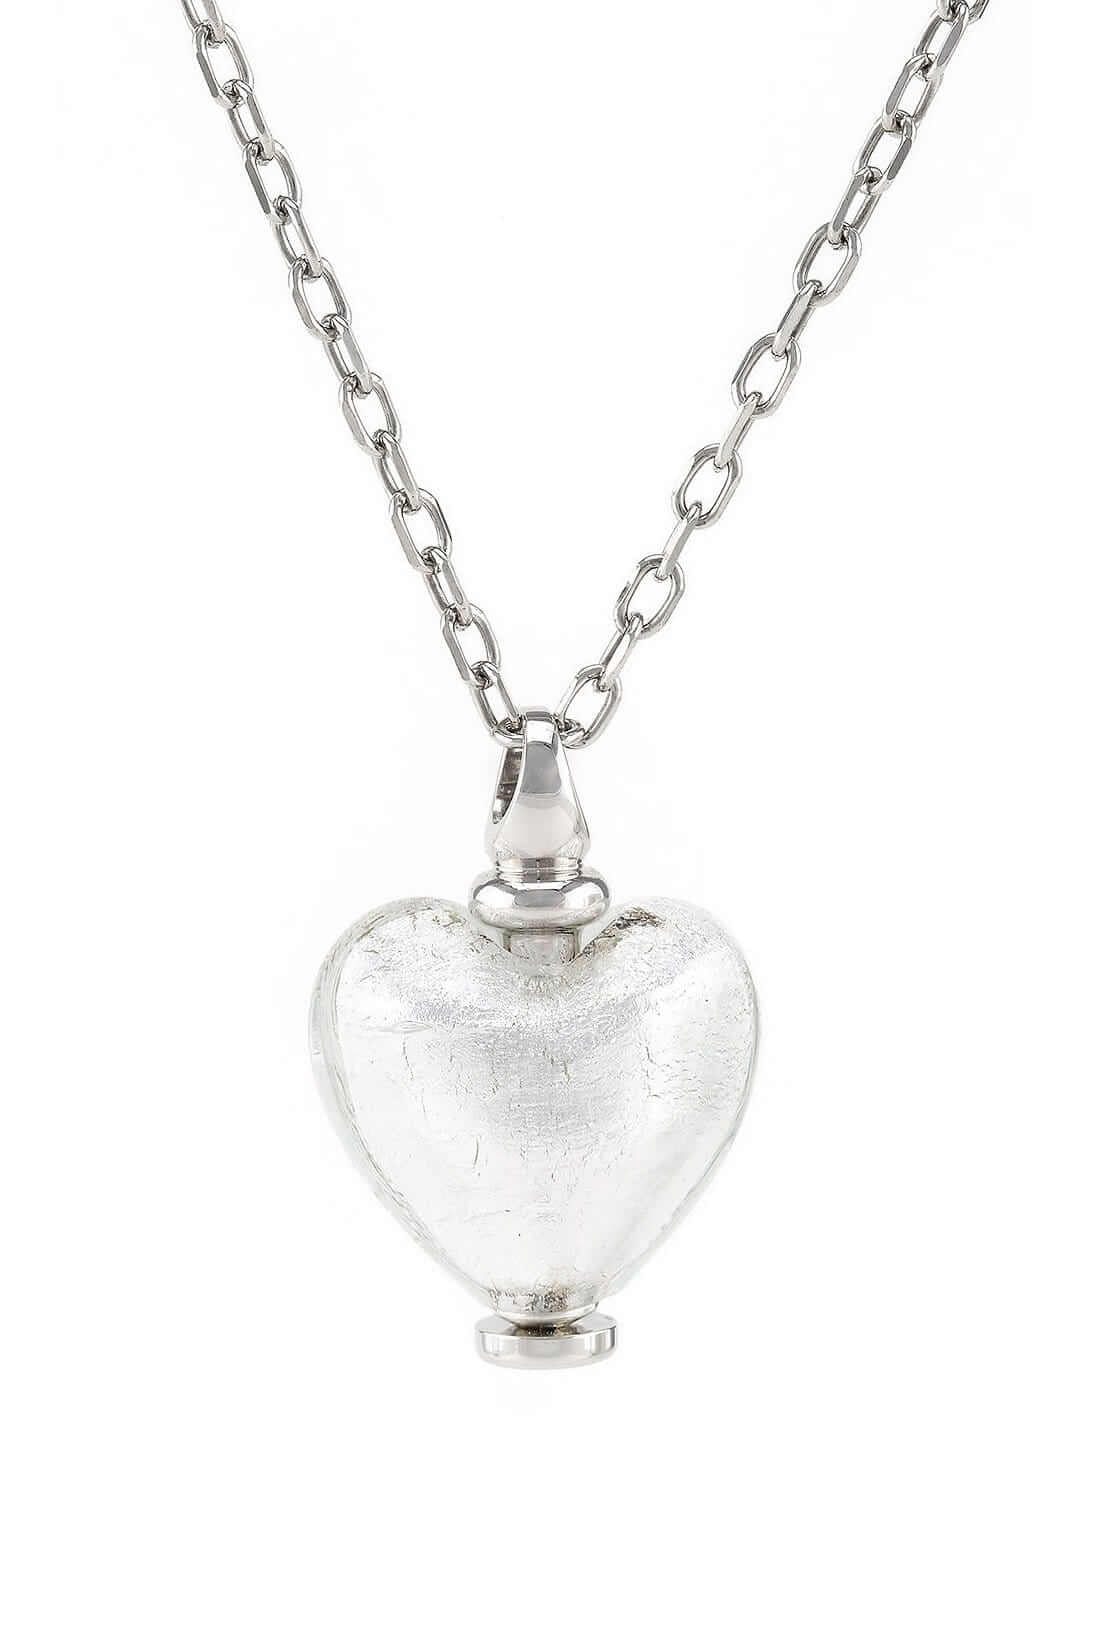 Cara Keepsakes Murano Glass Heart Urns Murano Glass Heart Urn - April